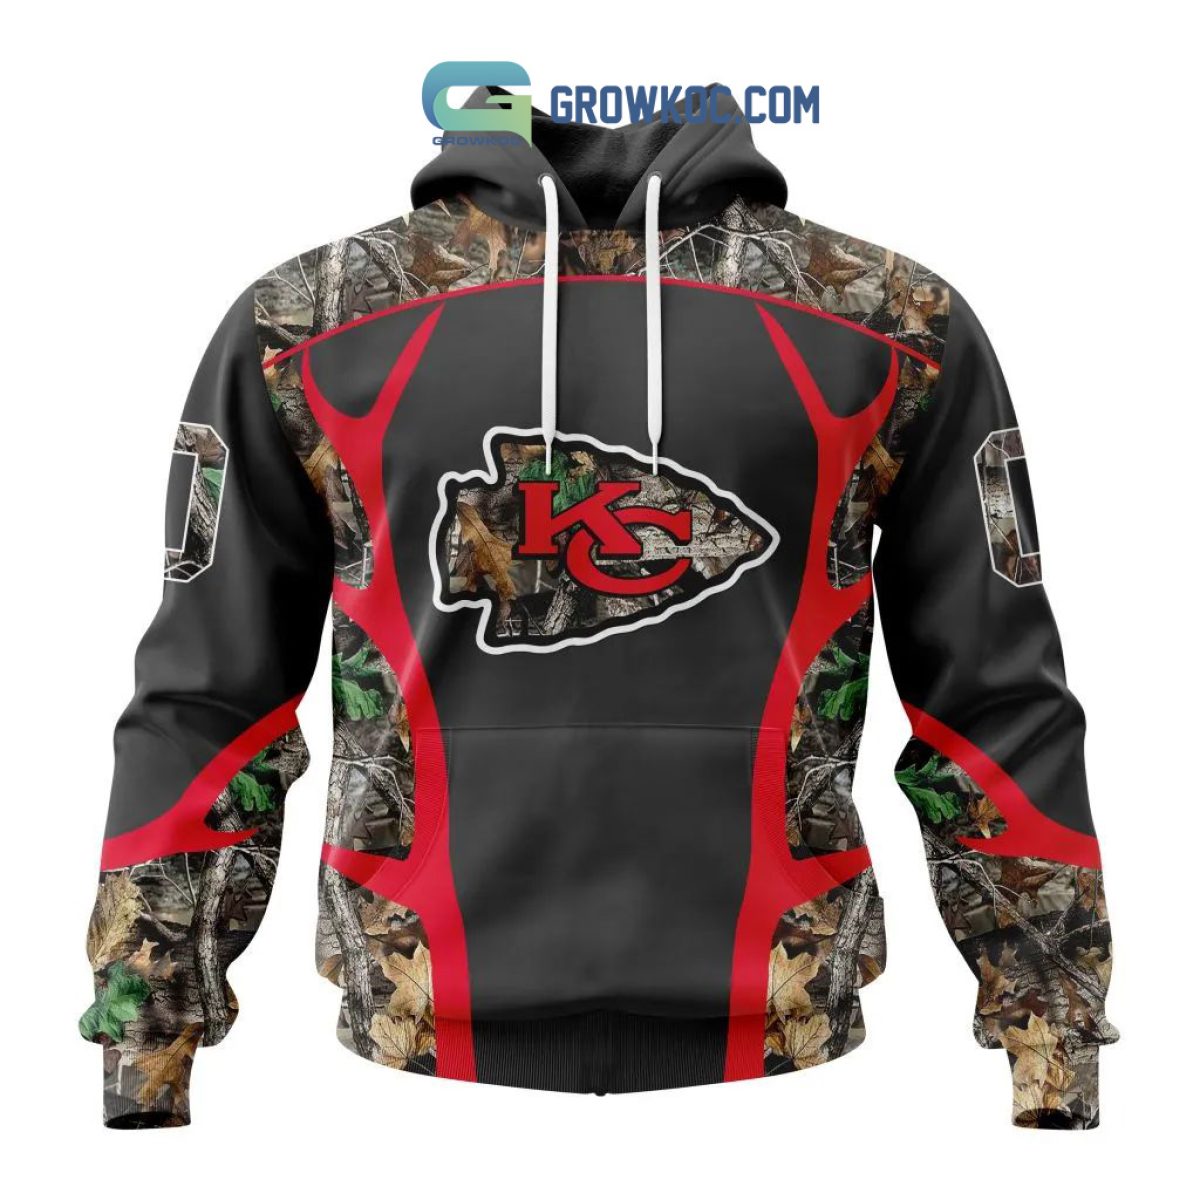 Kansa City Chiefs Red Black Design Baseball Jacket - Growkoc